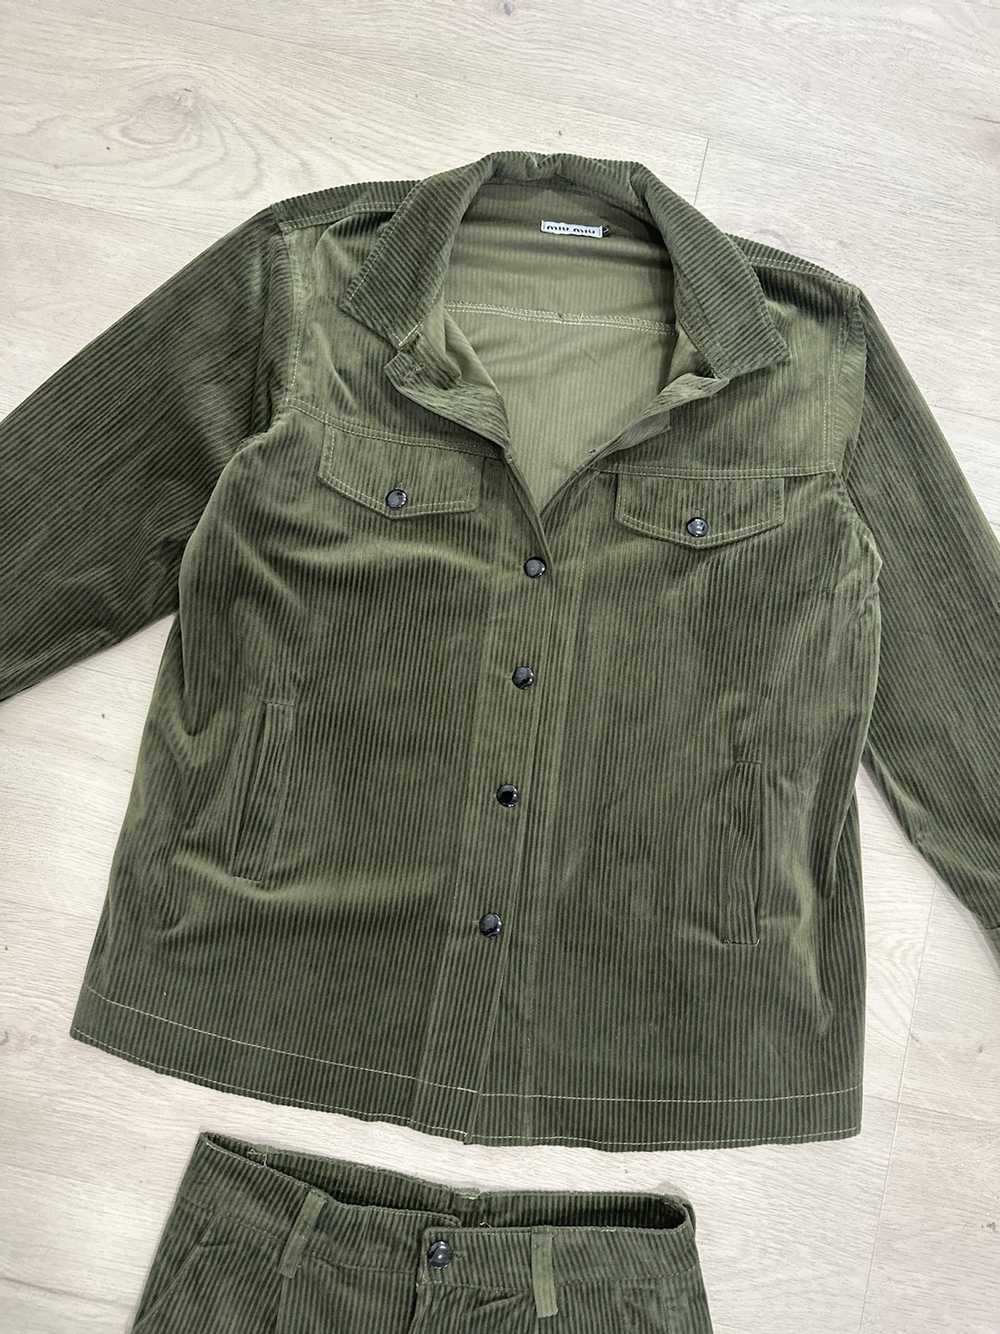 Miu Miu Vintage jacket and pants - image 2